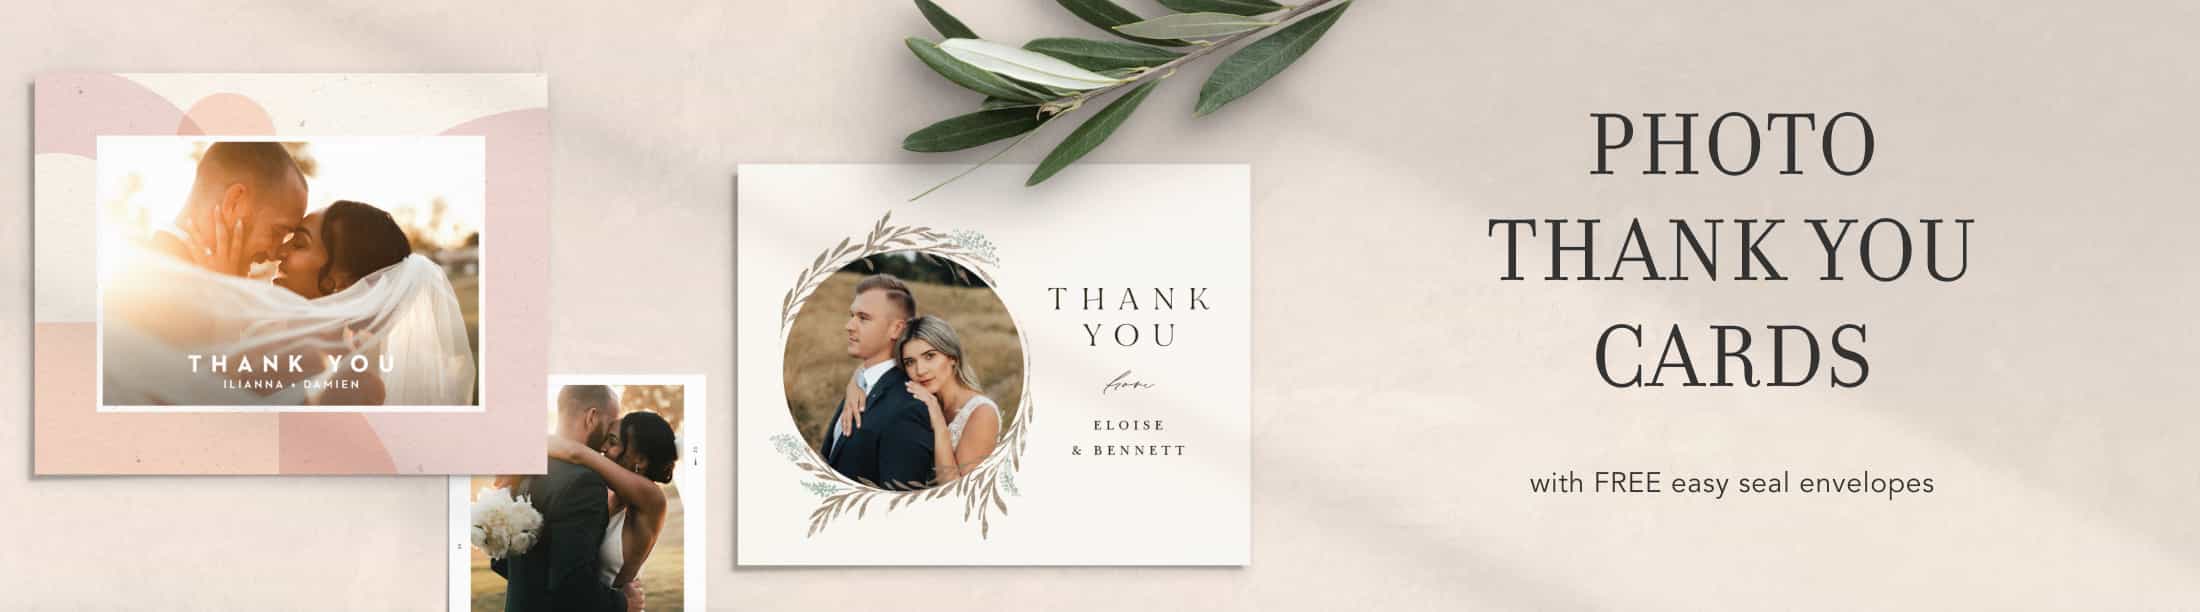 wedding thank you card designs